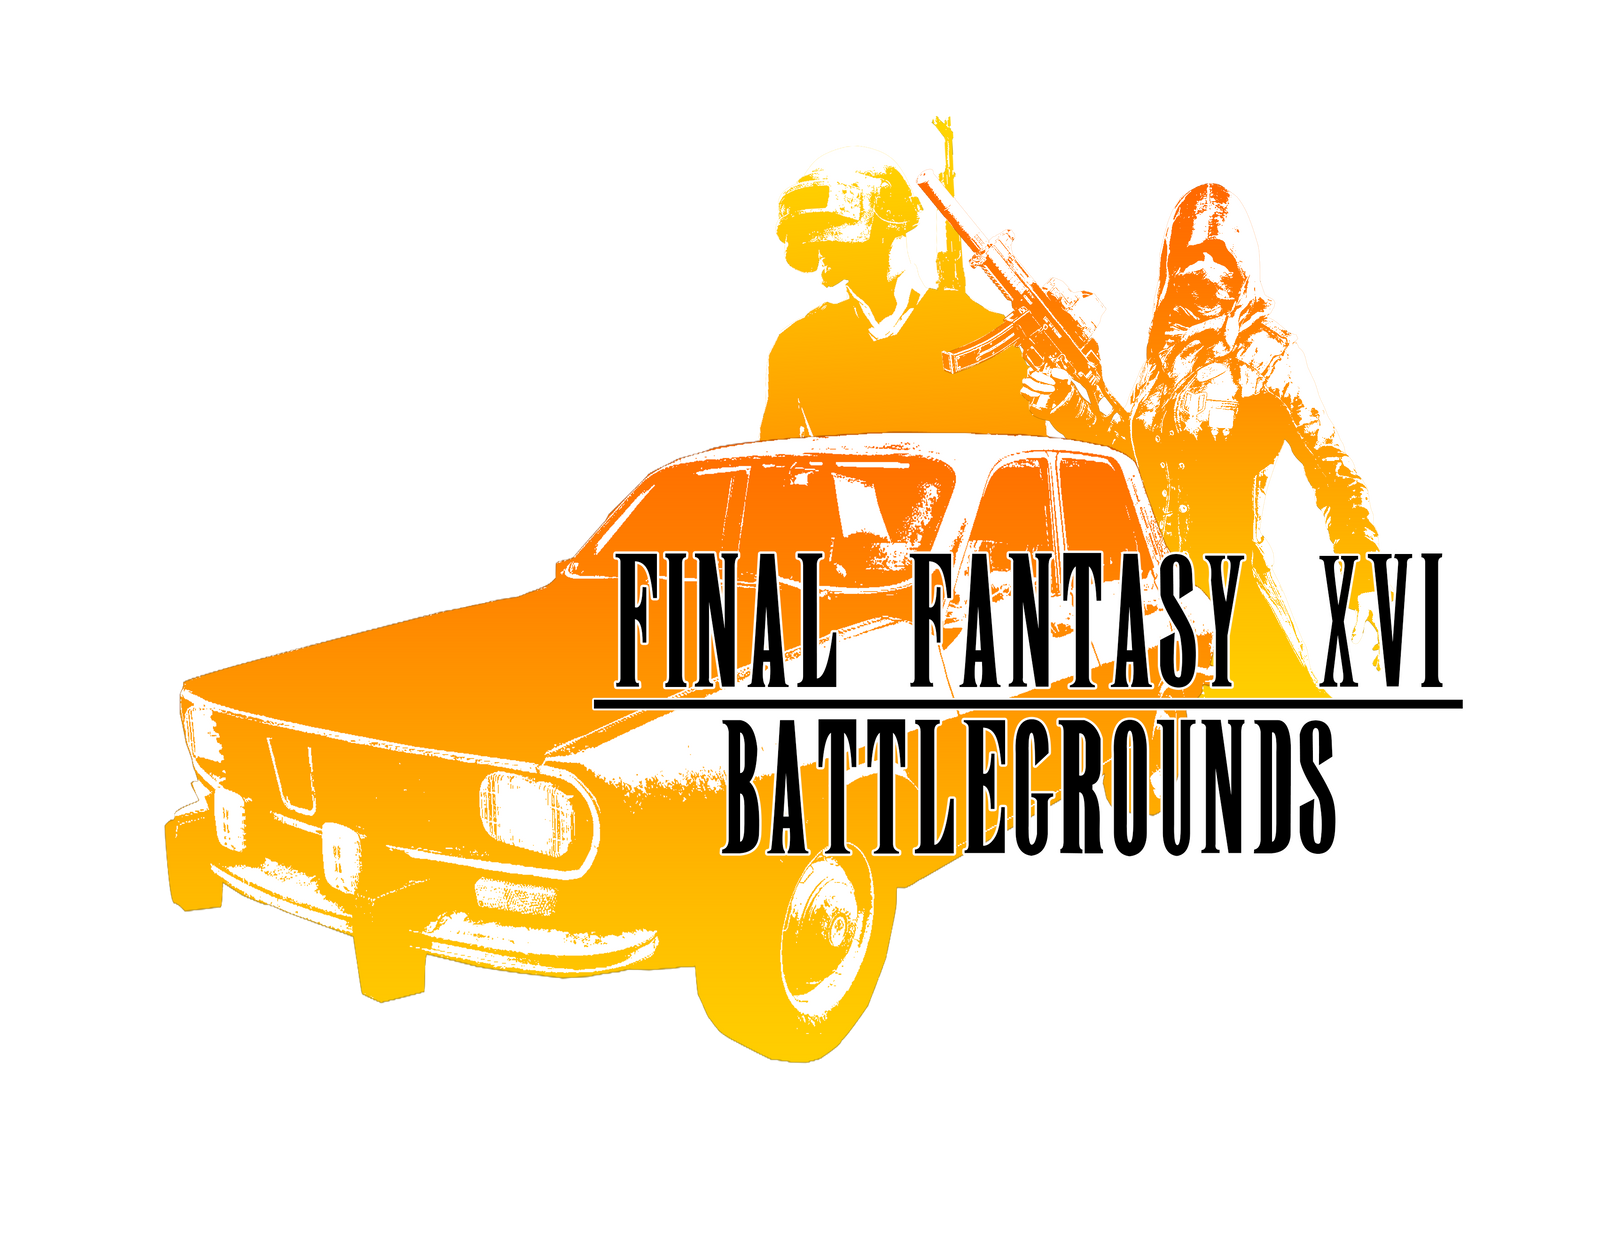 Final Fantasy XVI Battlegrounds by RodroSeasons on DeviantArt